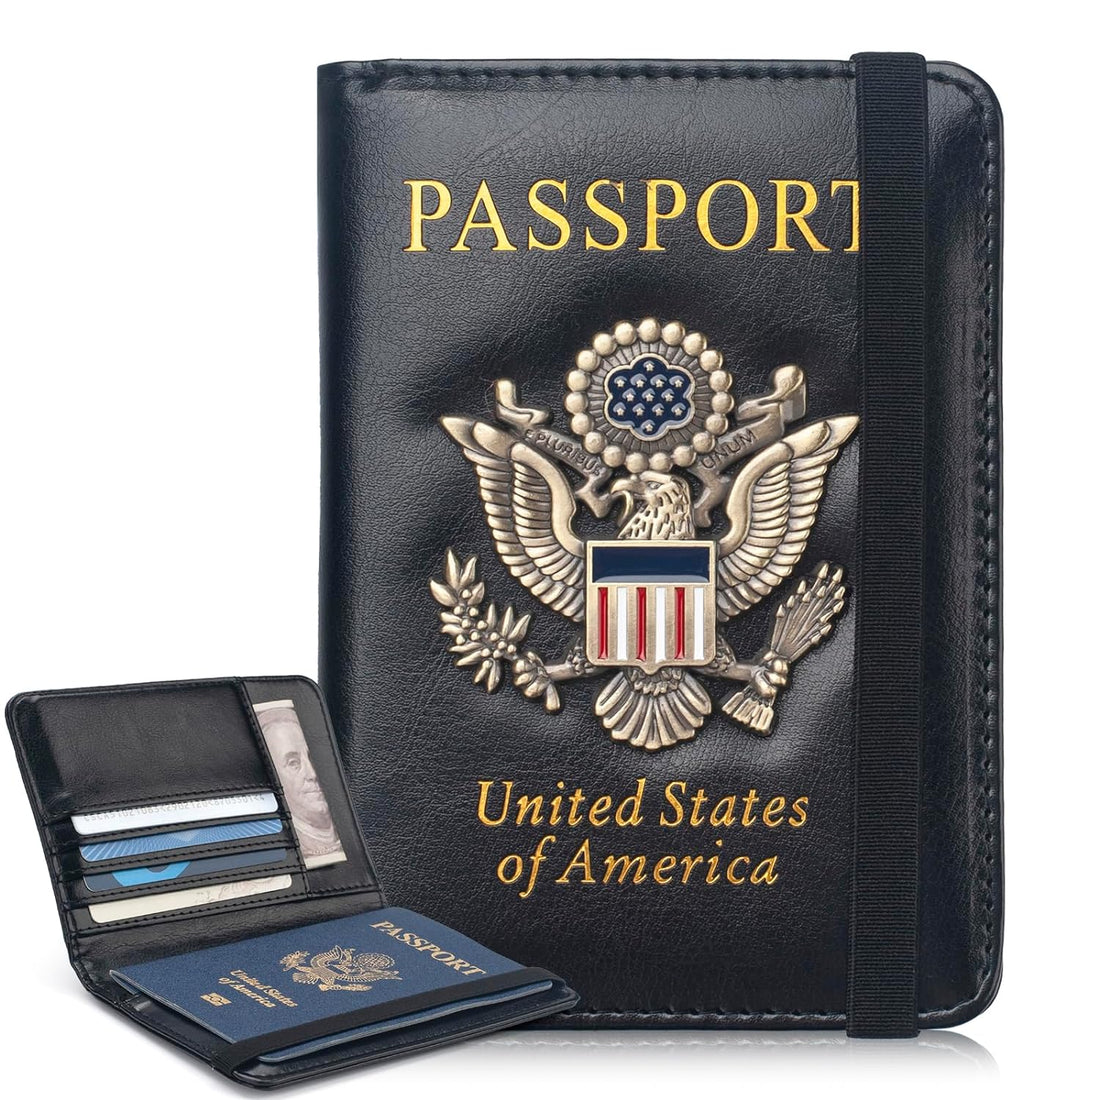 RFID Passport Holder Wallet Passport Cover Case for Women Men Travel, Waterproof Leather US Passport Book with Vaccine Card Slot, Passport and Ticket Organizer Travel Essentials Carrier Protector, Black, Rfid Wallet